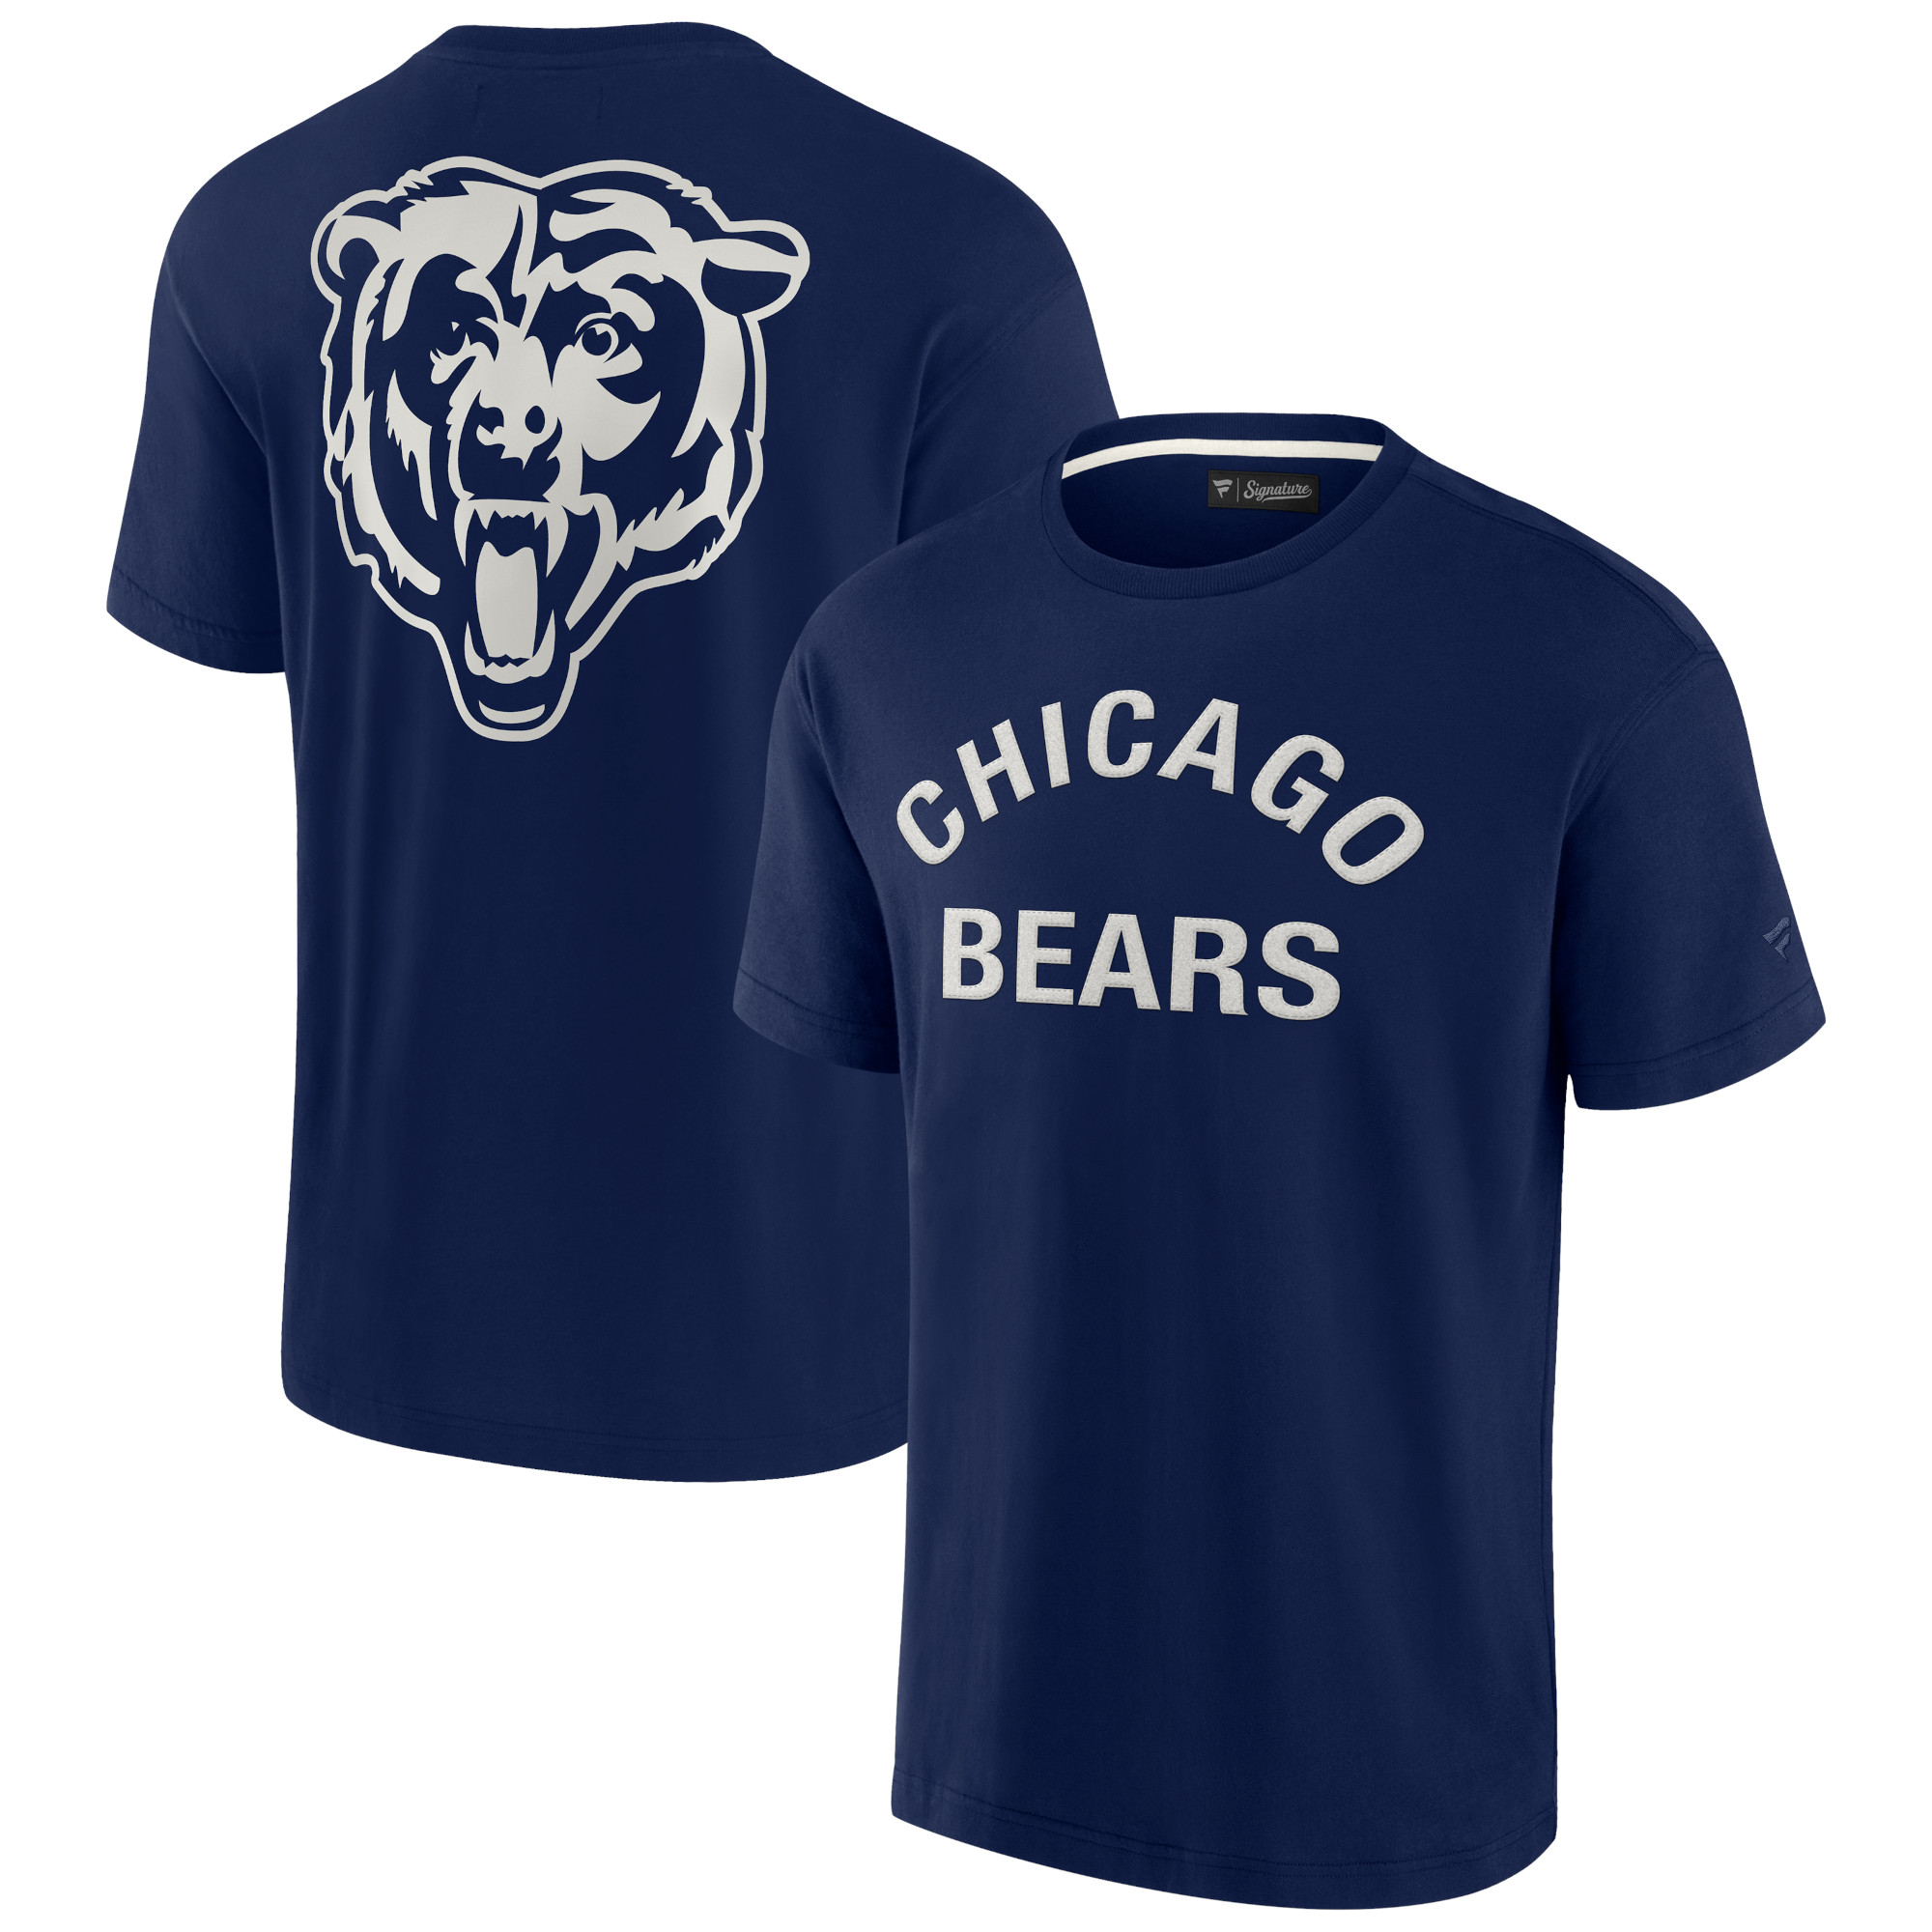 Unisex Fanatics Chicago Bears Elements Superweiches Kurzarm-T-Shirt, Marineblau